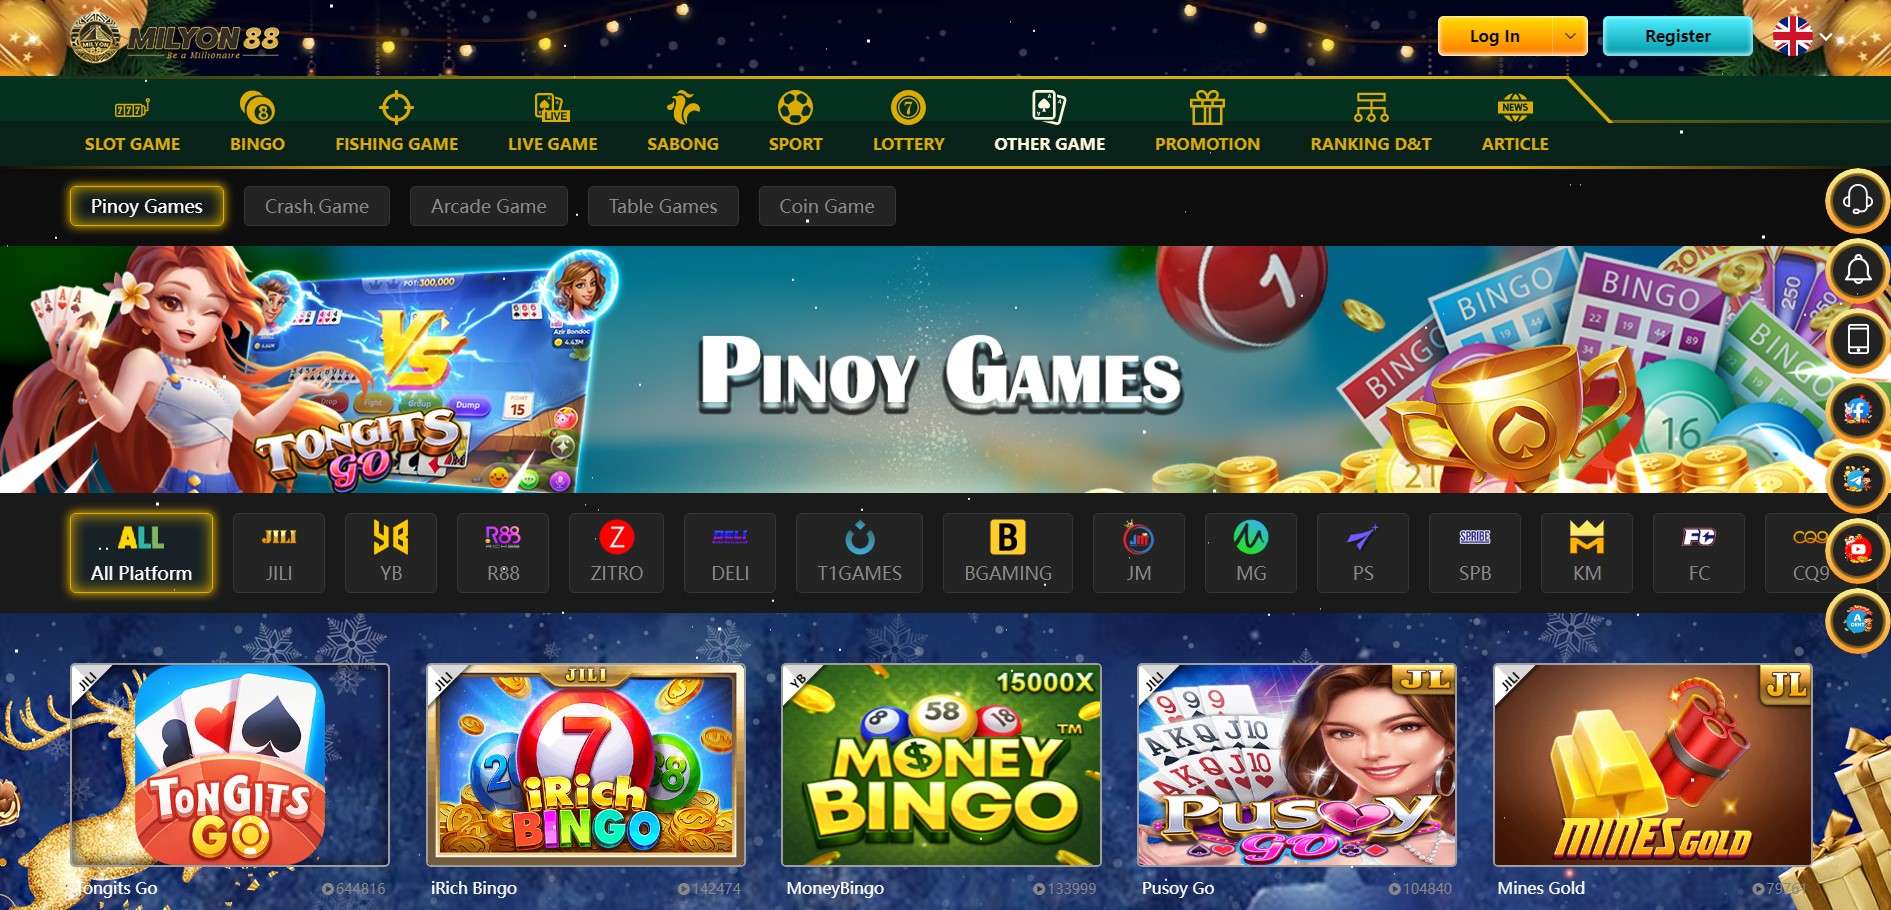 milyon88 online casino